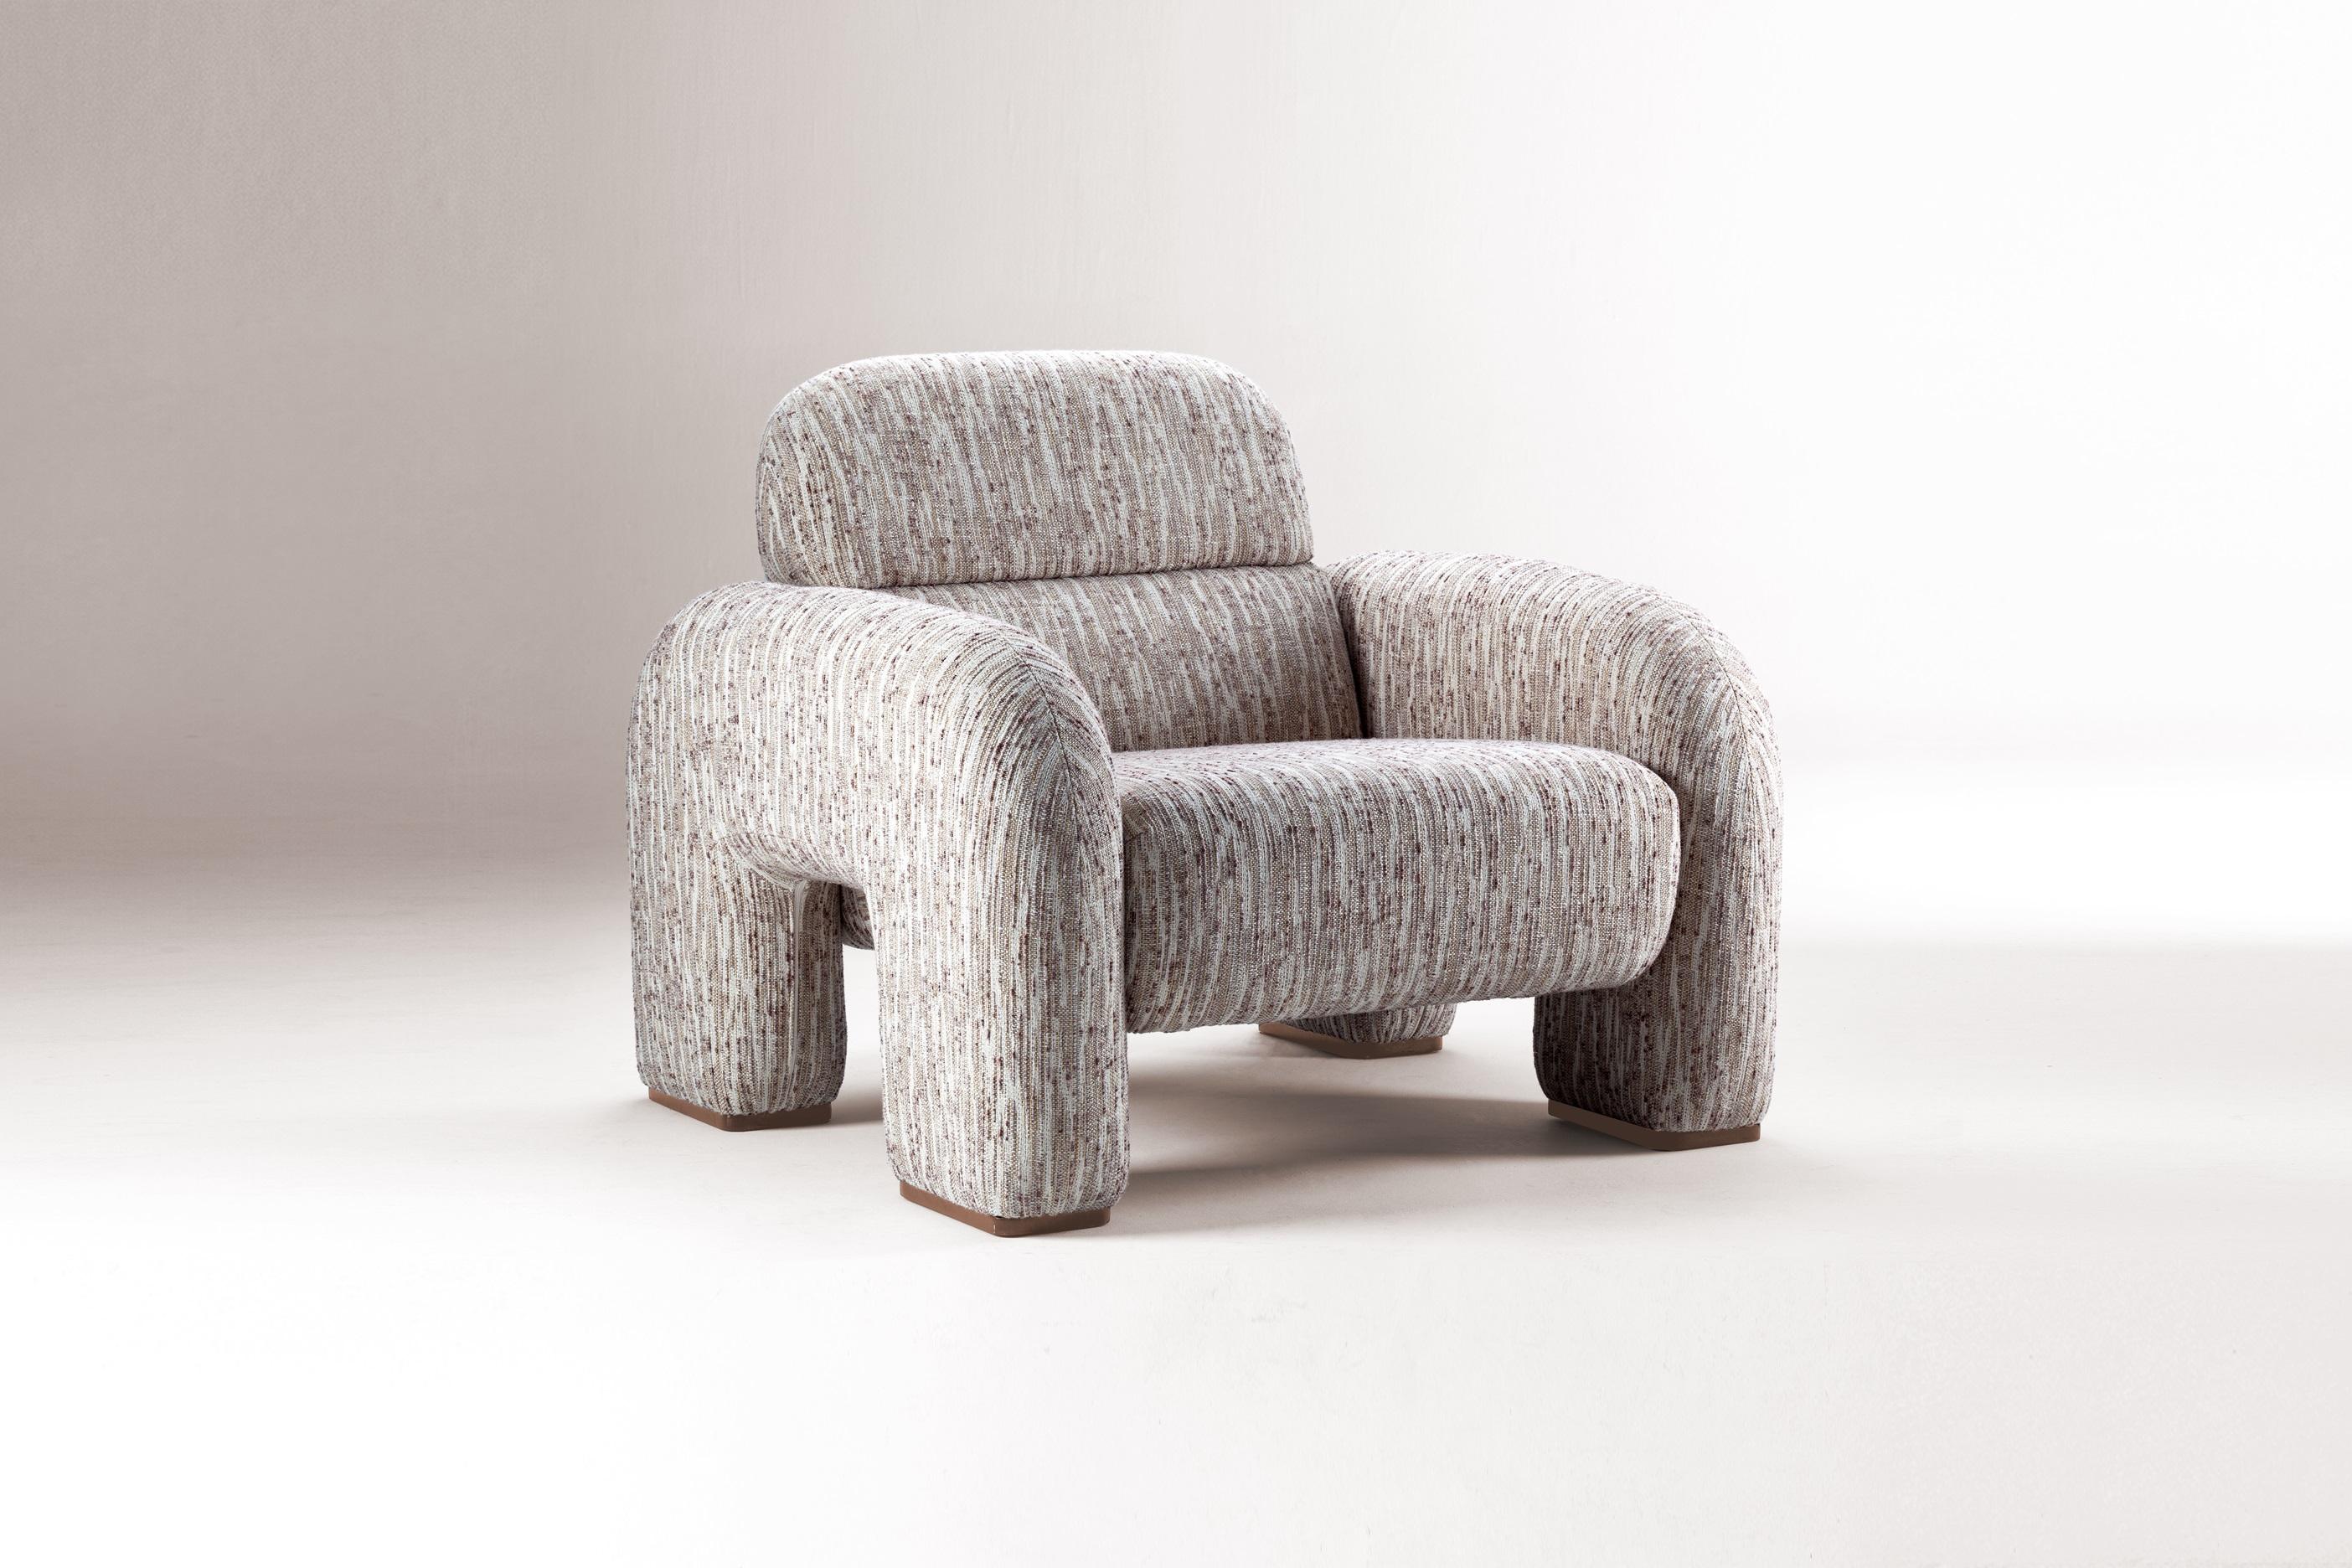 DOOQ! NEW! Organic Modernist Vertigo Armchair in Beige and Grey Fabric

Introducing Vertigo, our striking armchair inspired by the brutalist movement, where raw concrete aesthetics meet unparalleled comfort. The bold, sculptural design of Vertigo